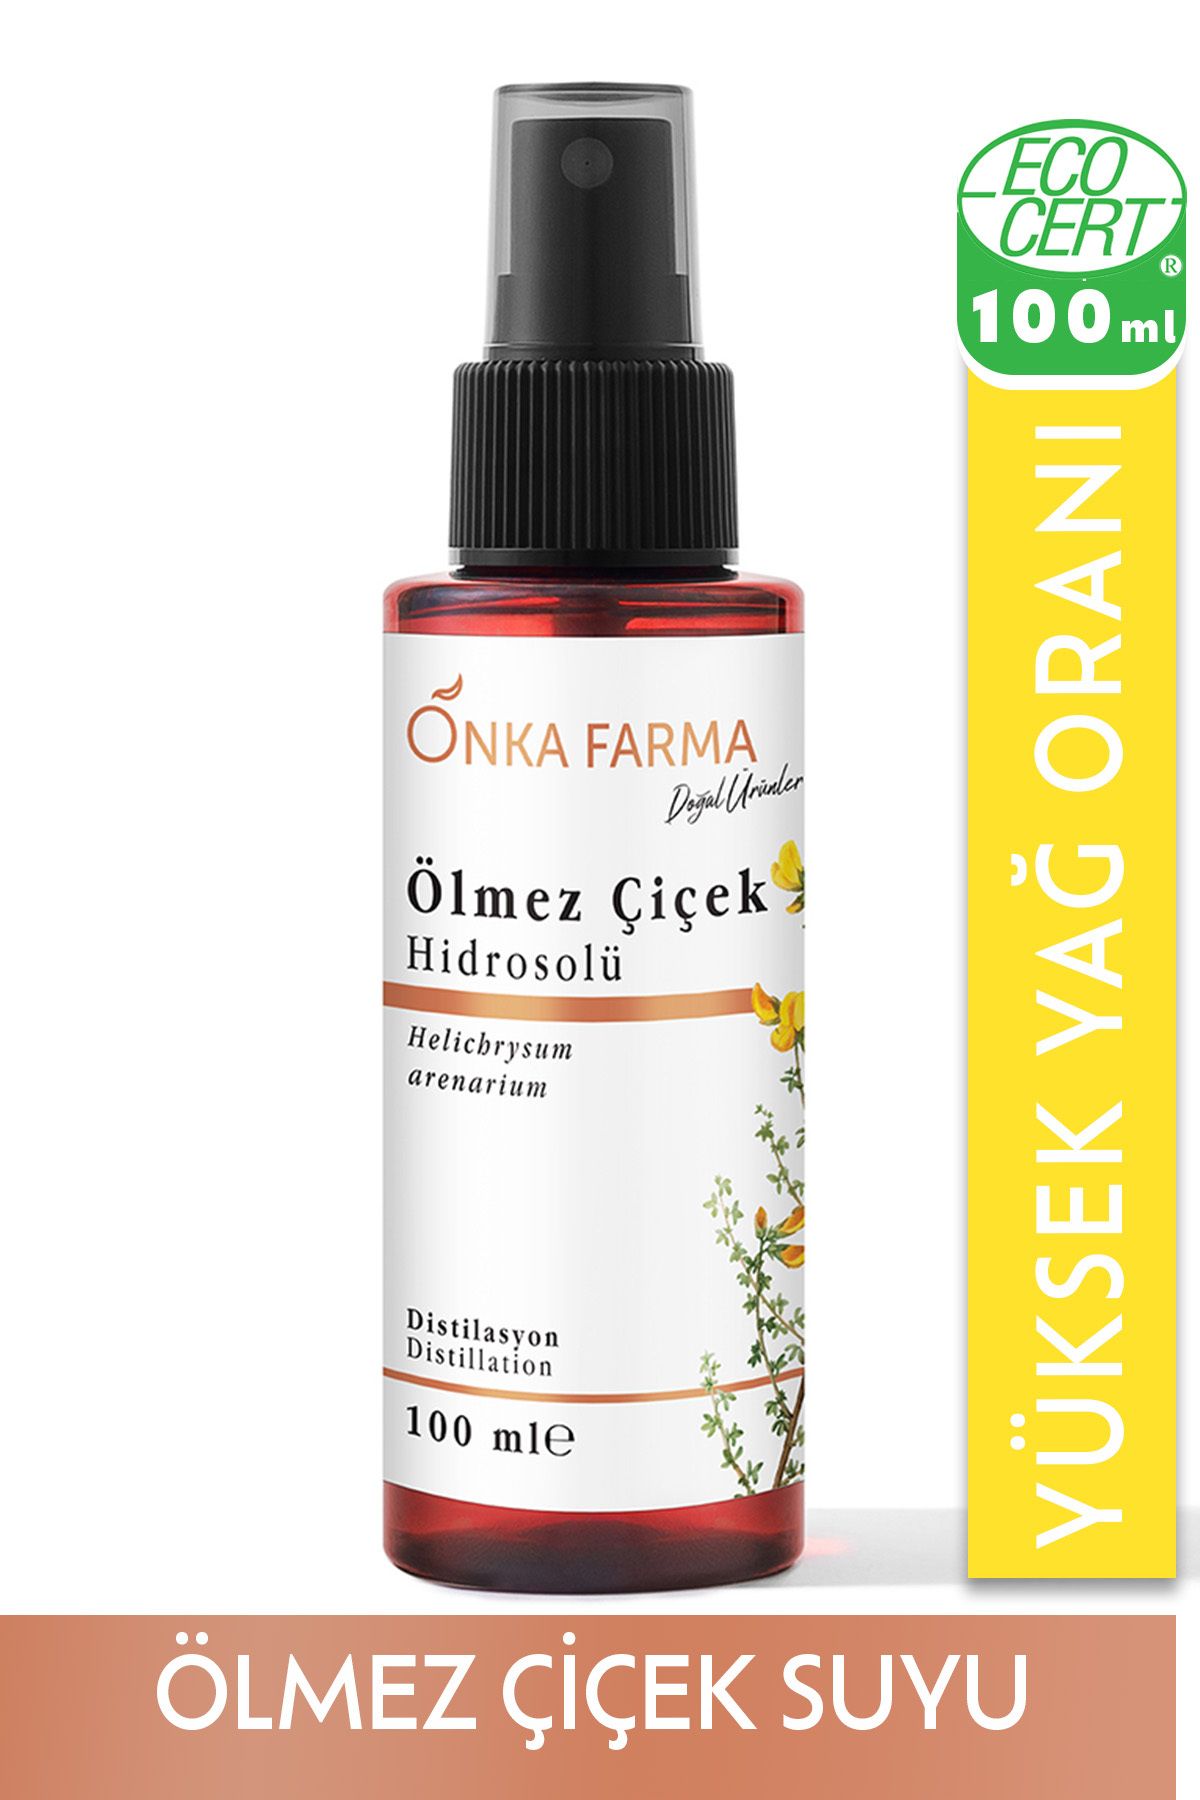 OnkaFarma Onka Farma Ölmez Çiçek Suyu / Hidrosolü Tonik Yağı Alınmamış Doğal İçerik 100 ml